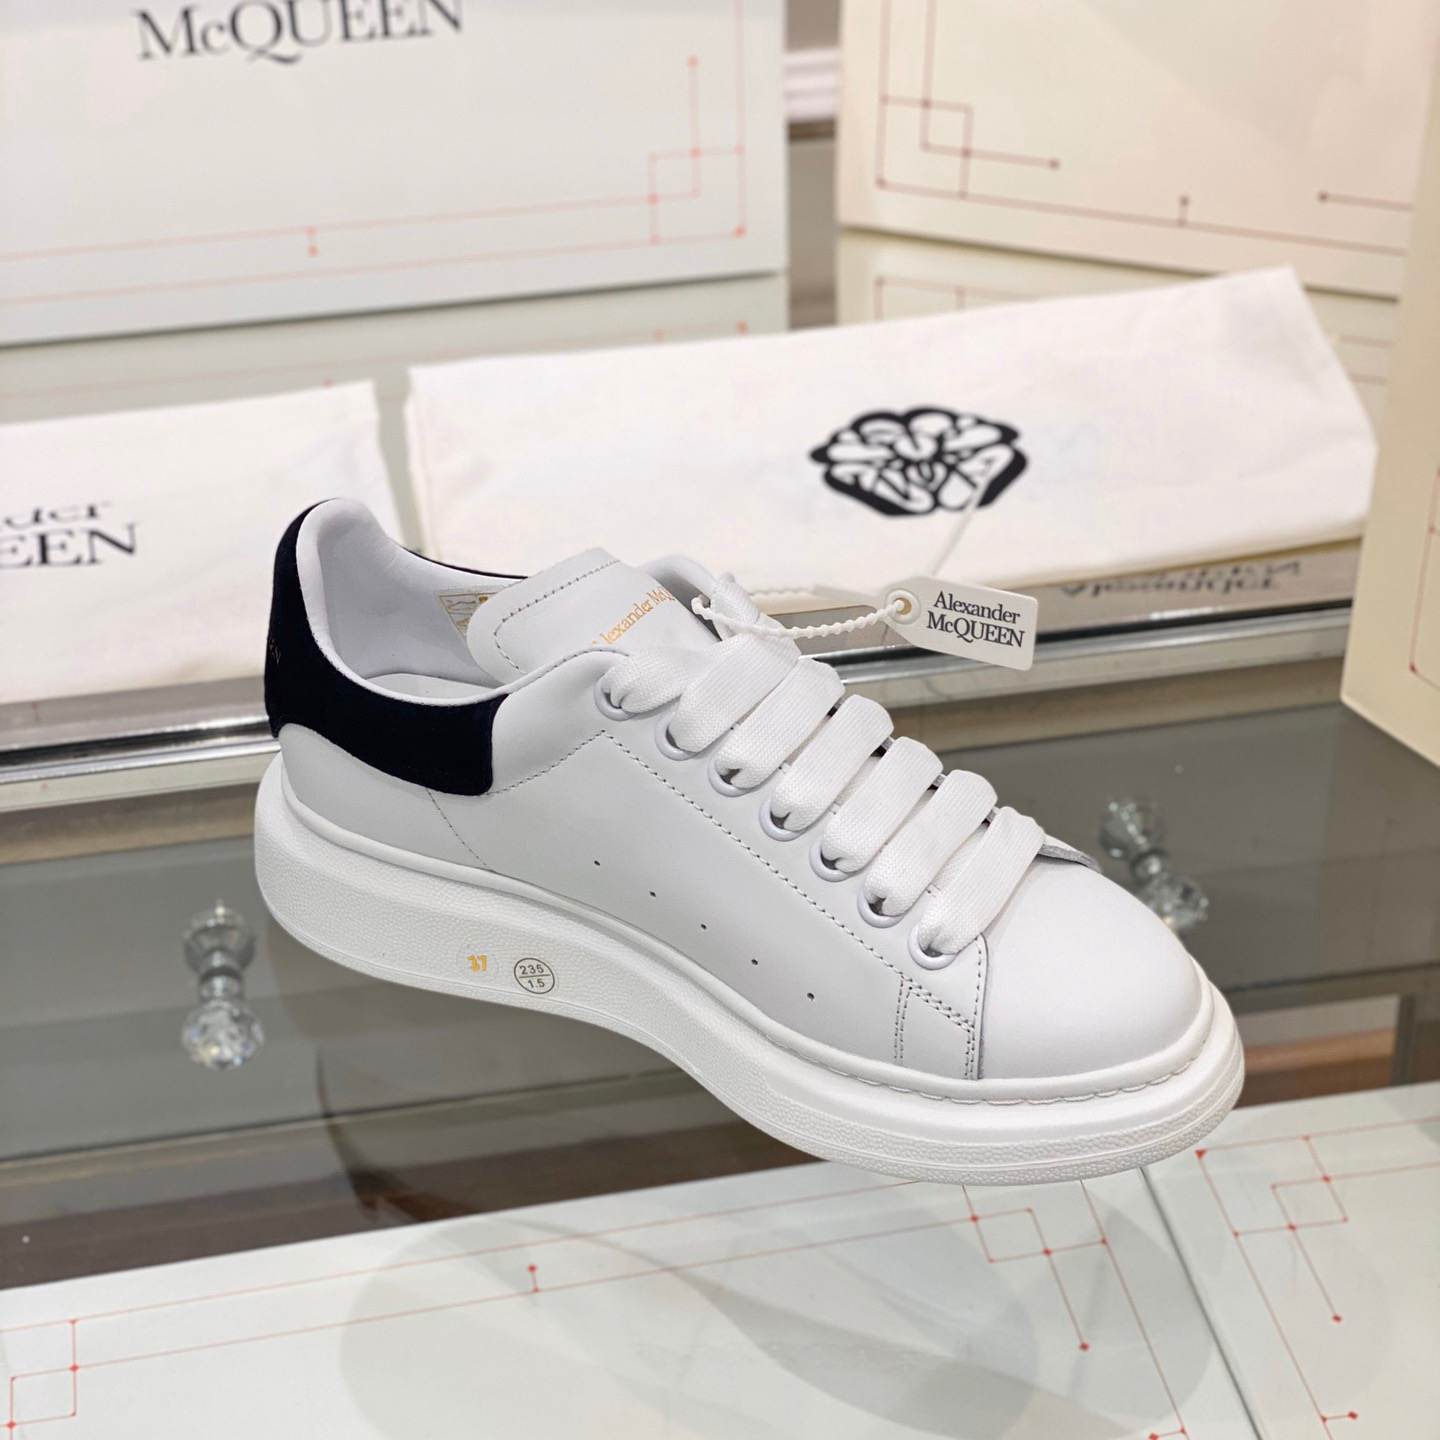 Alexander Mqueen Air Platform Suede Leather Sneakers  - DesignerGu